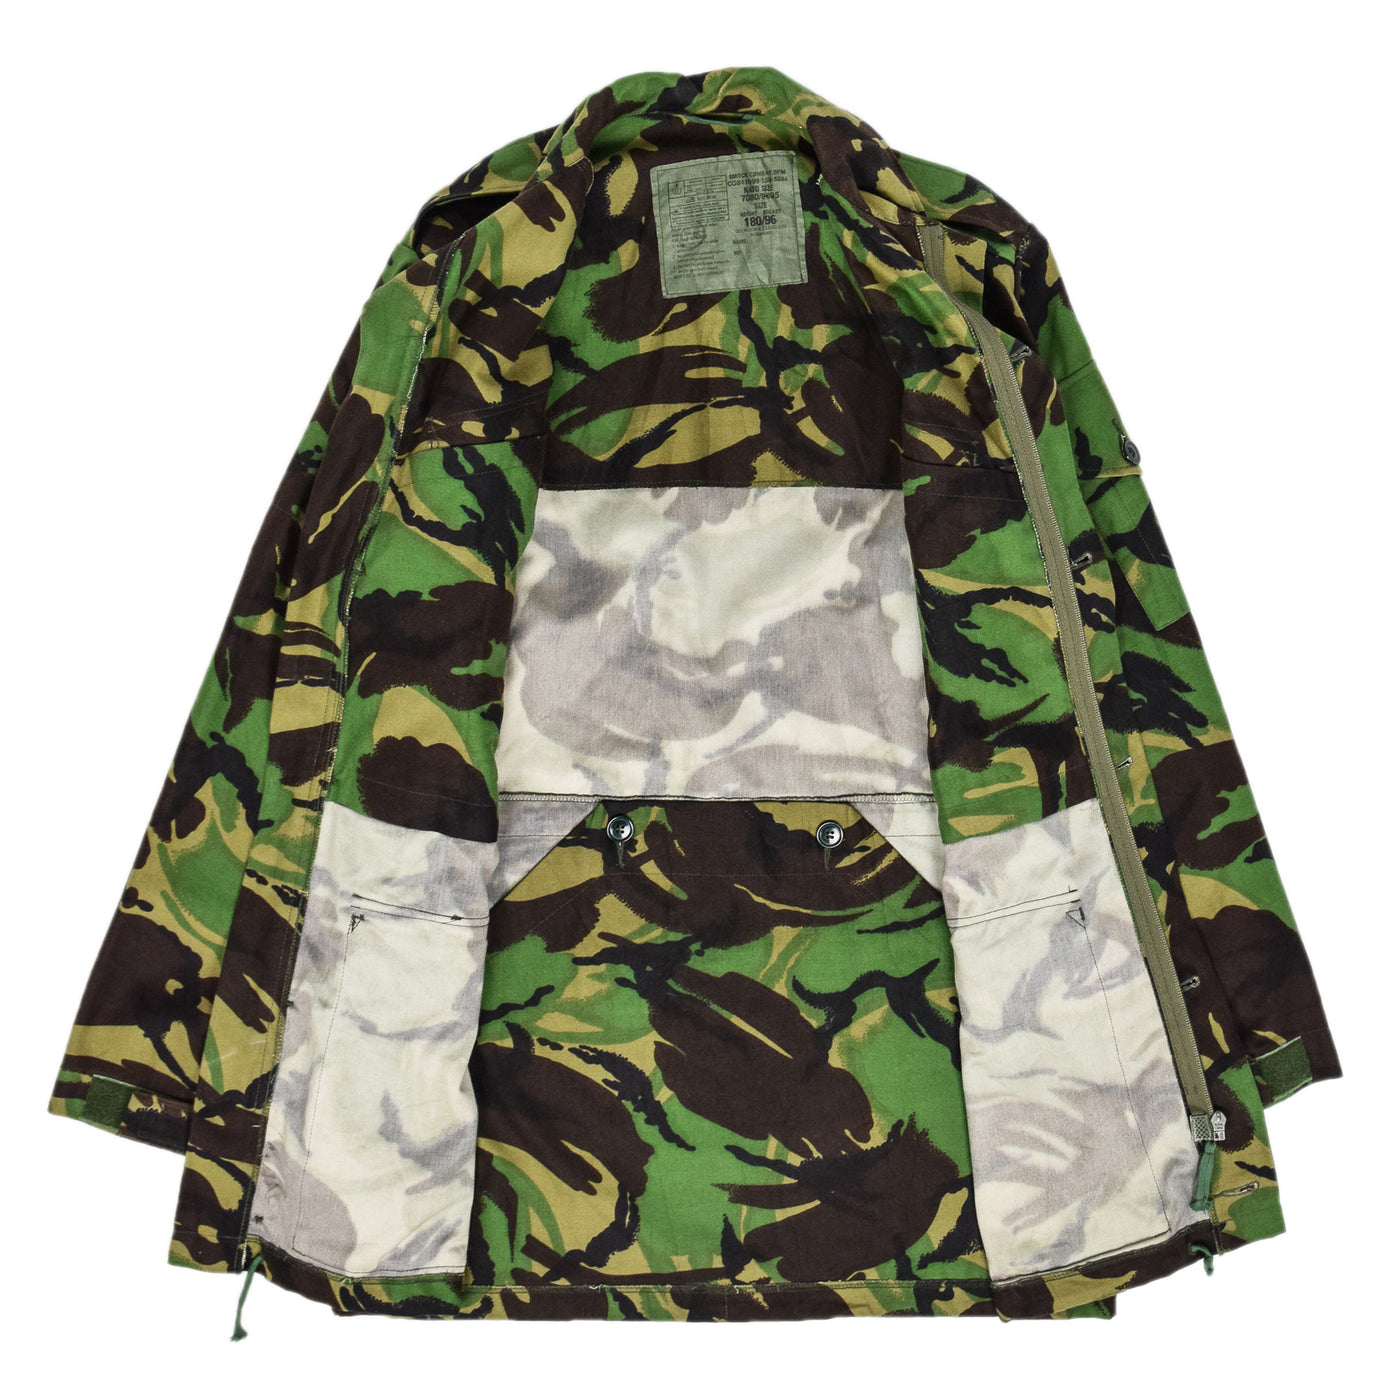 Vintage 90s British Army Combat Smock Woodland DPM Camo Jacket M INTERNAL